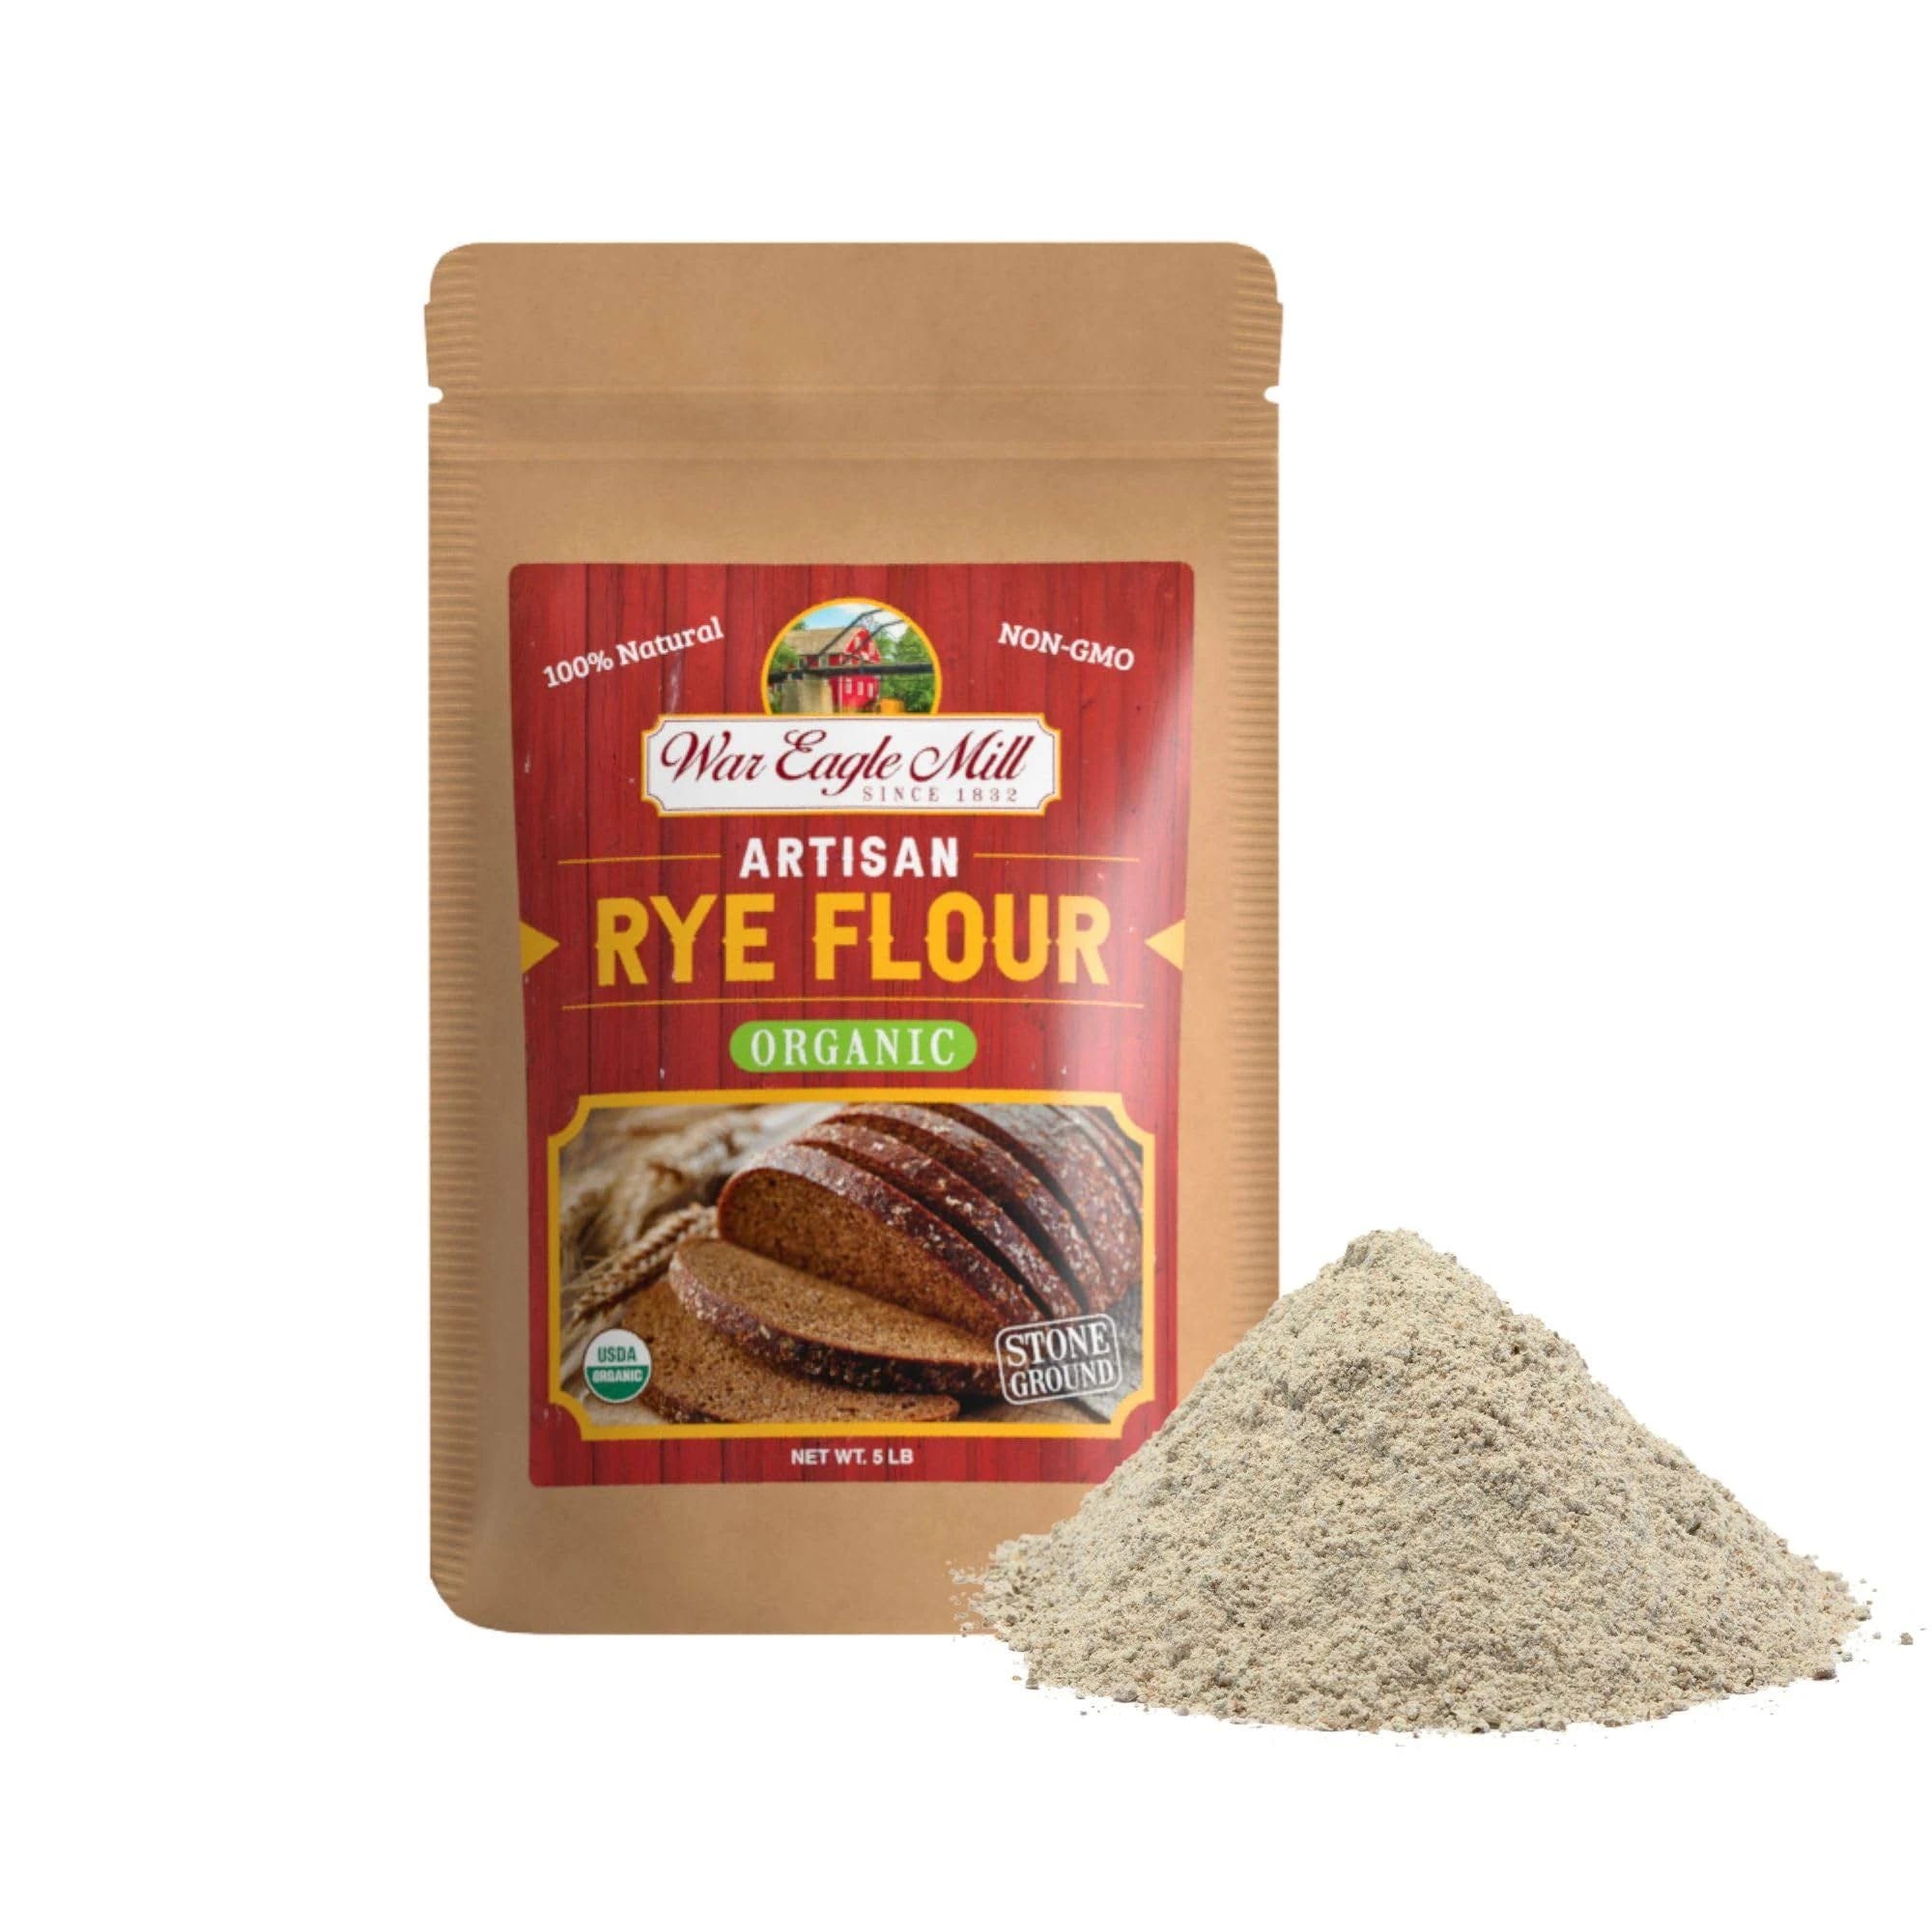 Organic & Non-GMO Rye Flour for Baking - 5 lbs. | Image